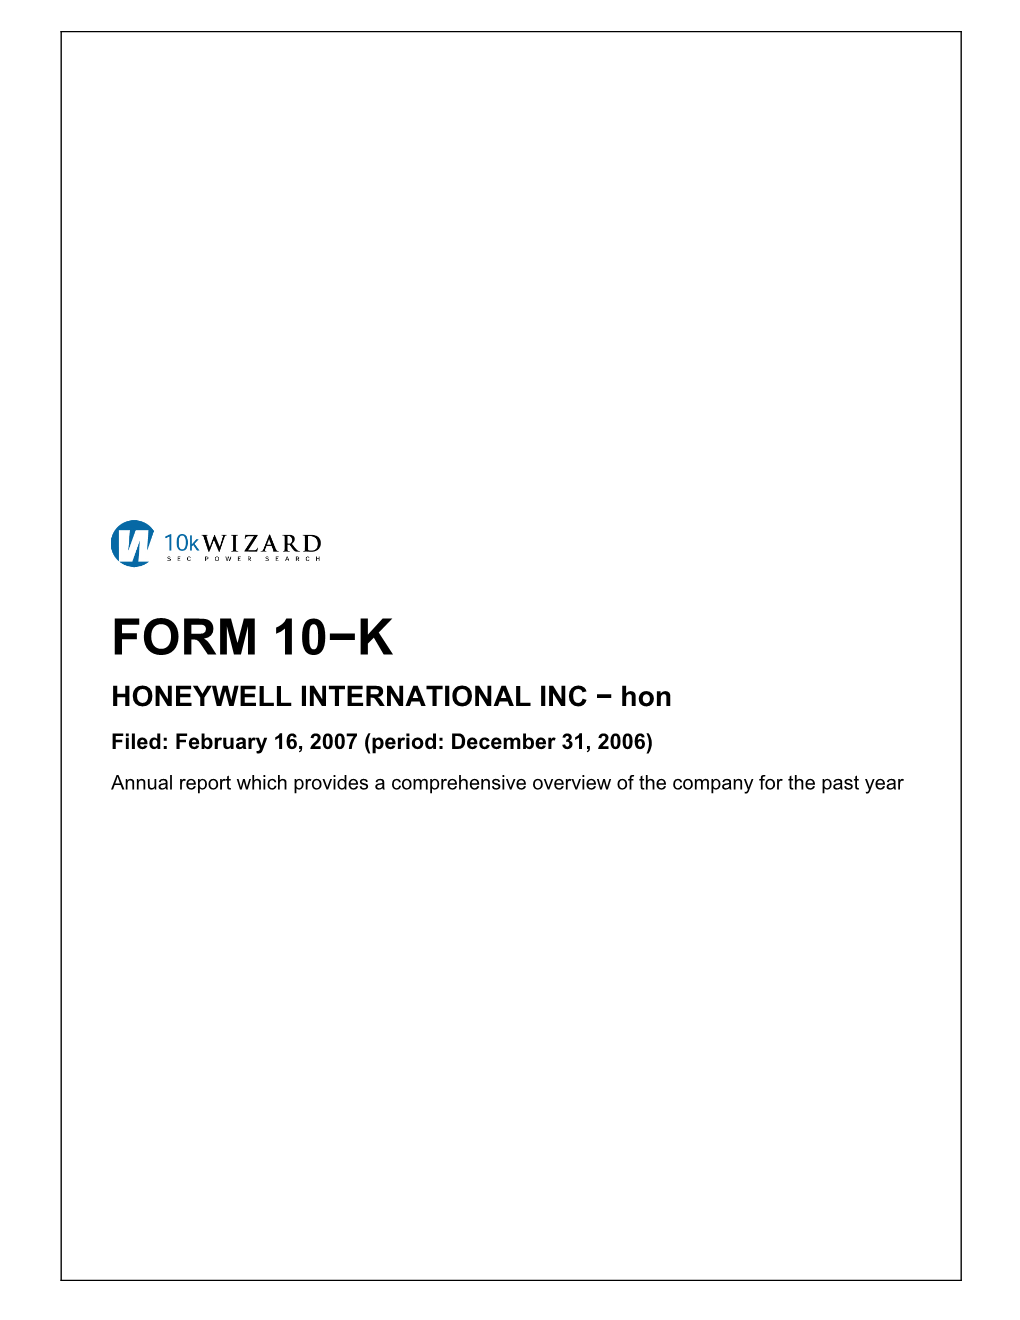 FORM 10−K HONEYWELL INTERNATIONAL INC − Hon Filed: February 16, 2007 (Period: December 31, 2006)